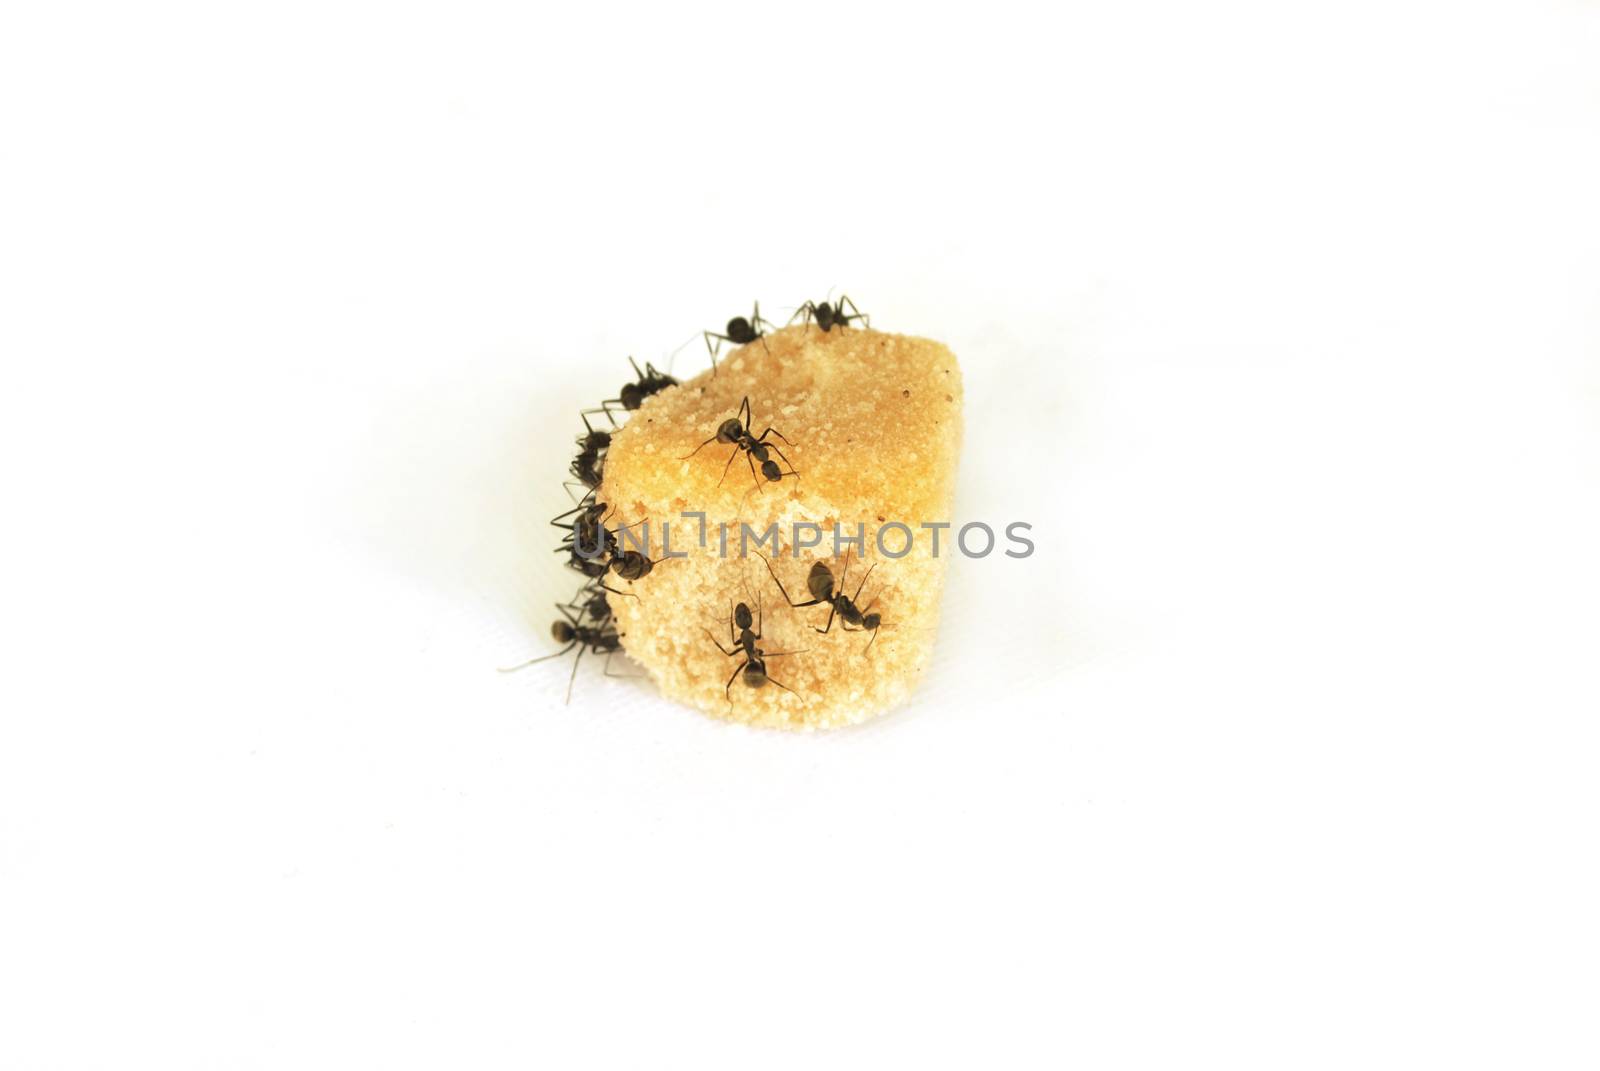 Ants eat sugar on white background.